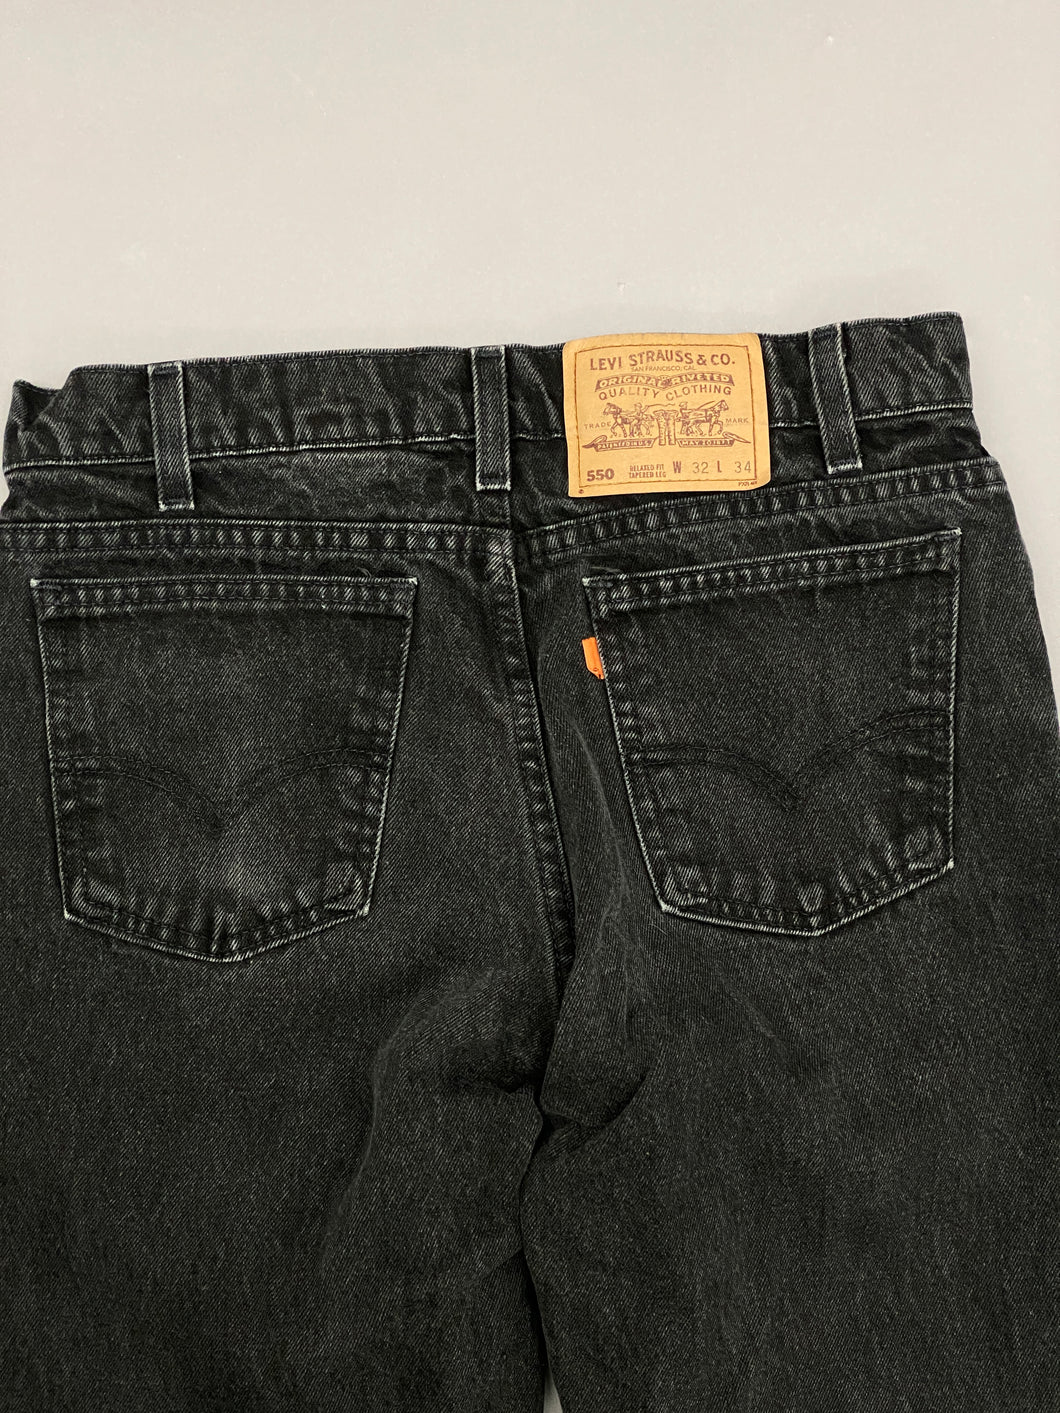 Levis Orange Tab Vintage Jeans - 32x34 – Ropa Chidx